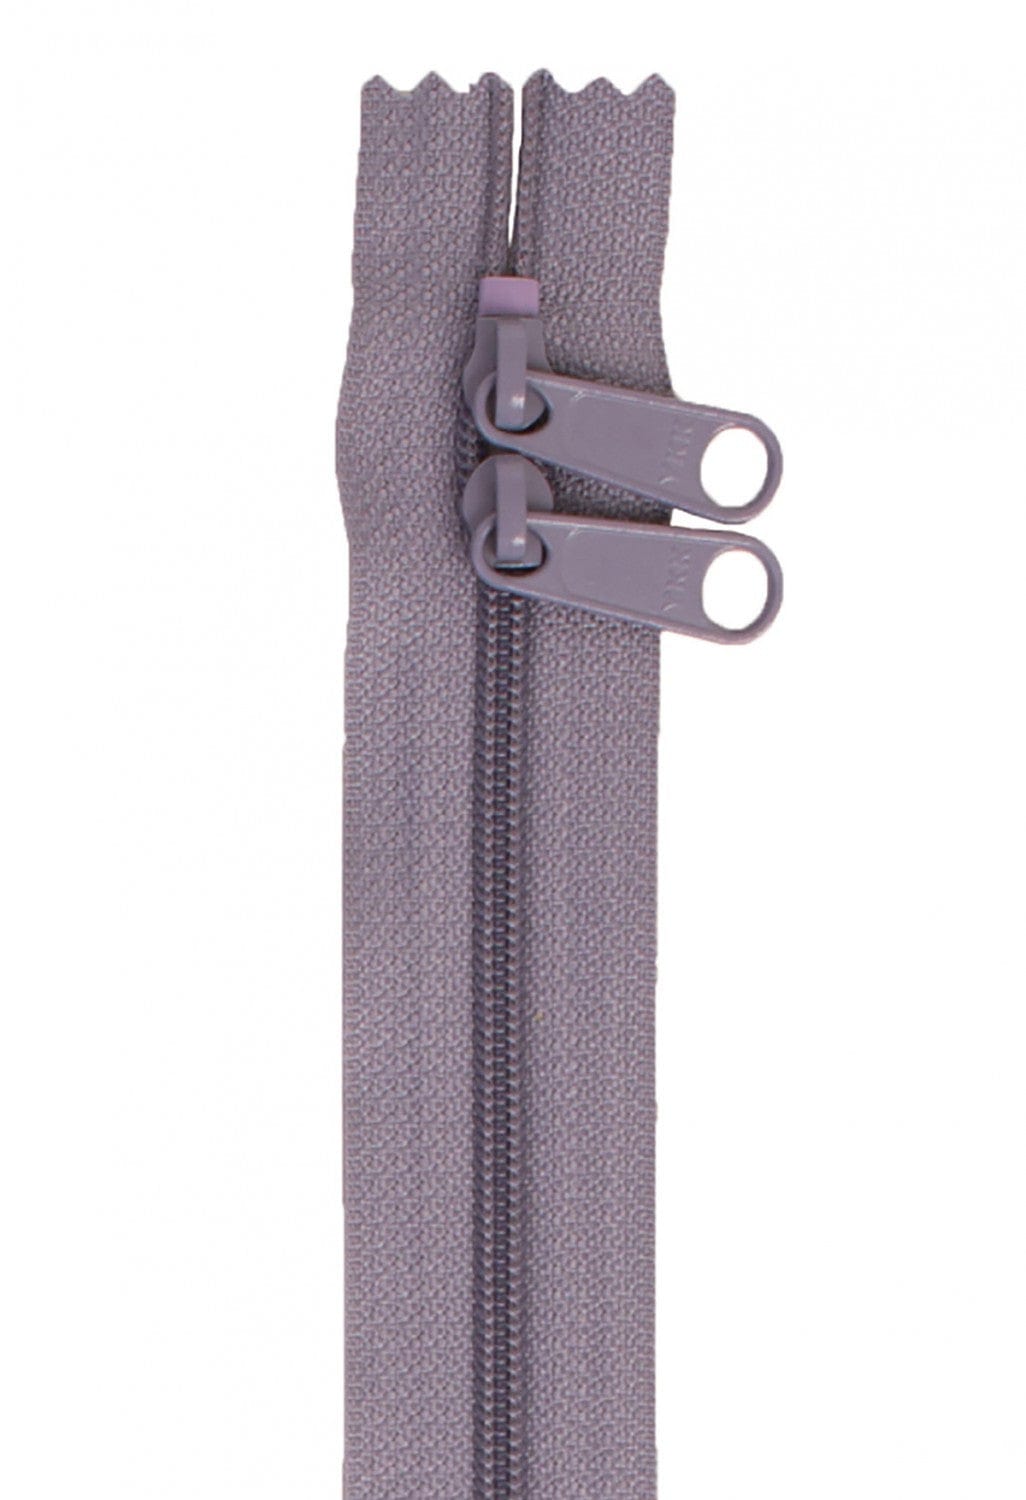 30" Long Double Slide Handbag Zipper in Gunmetal Gray